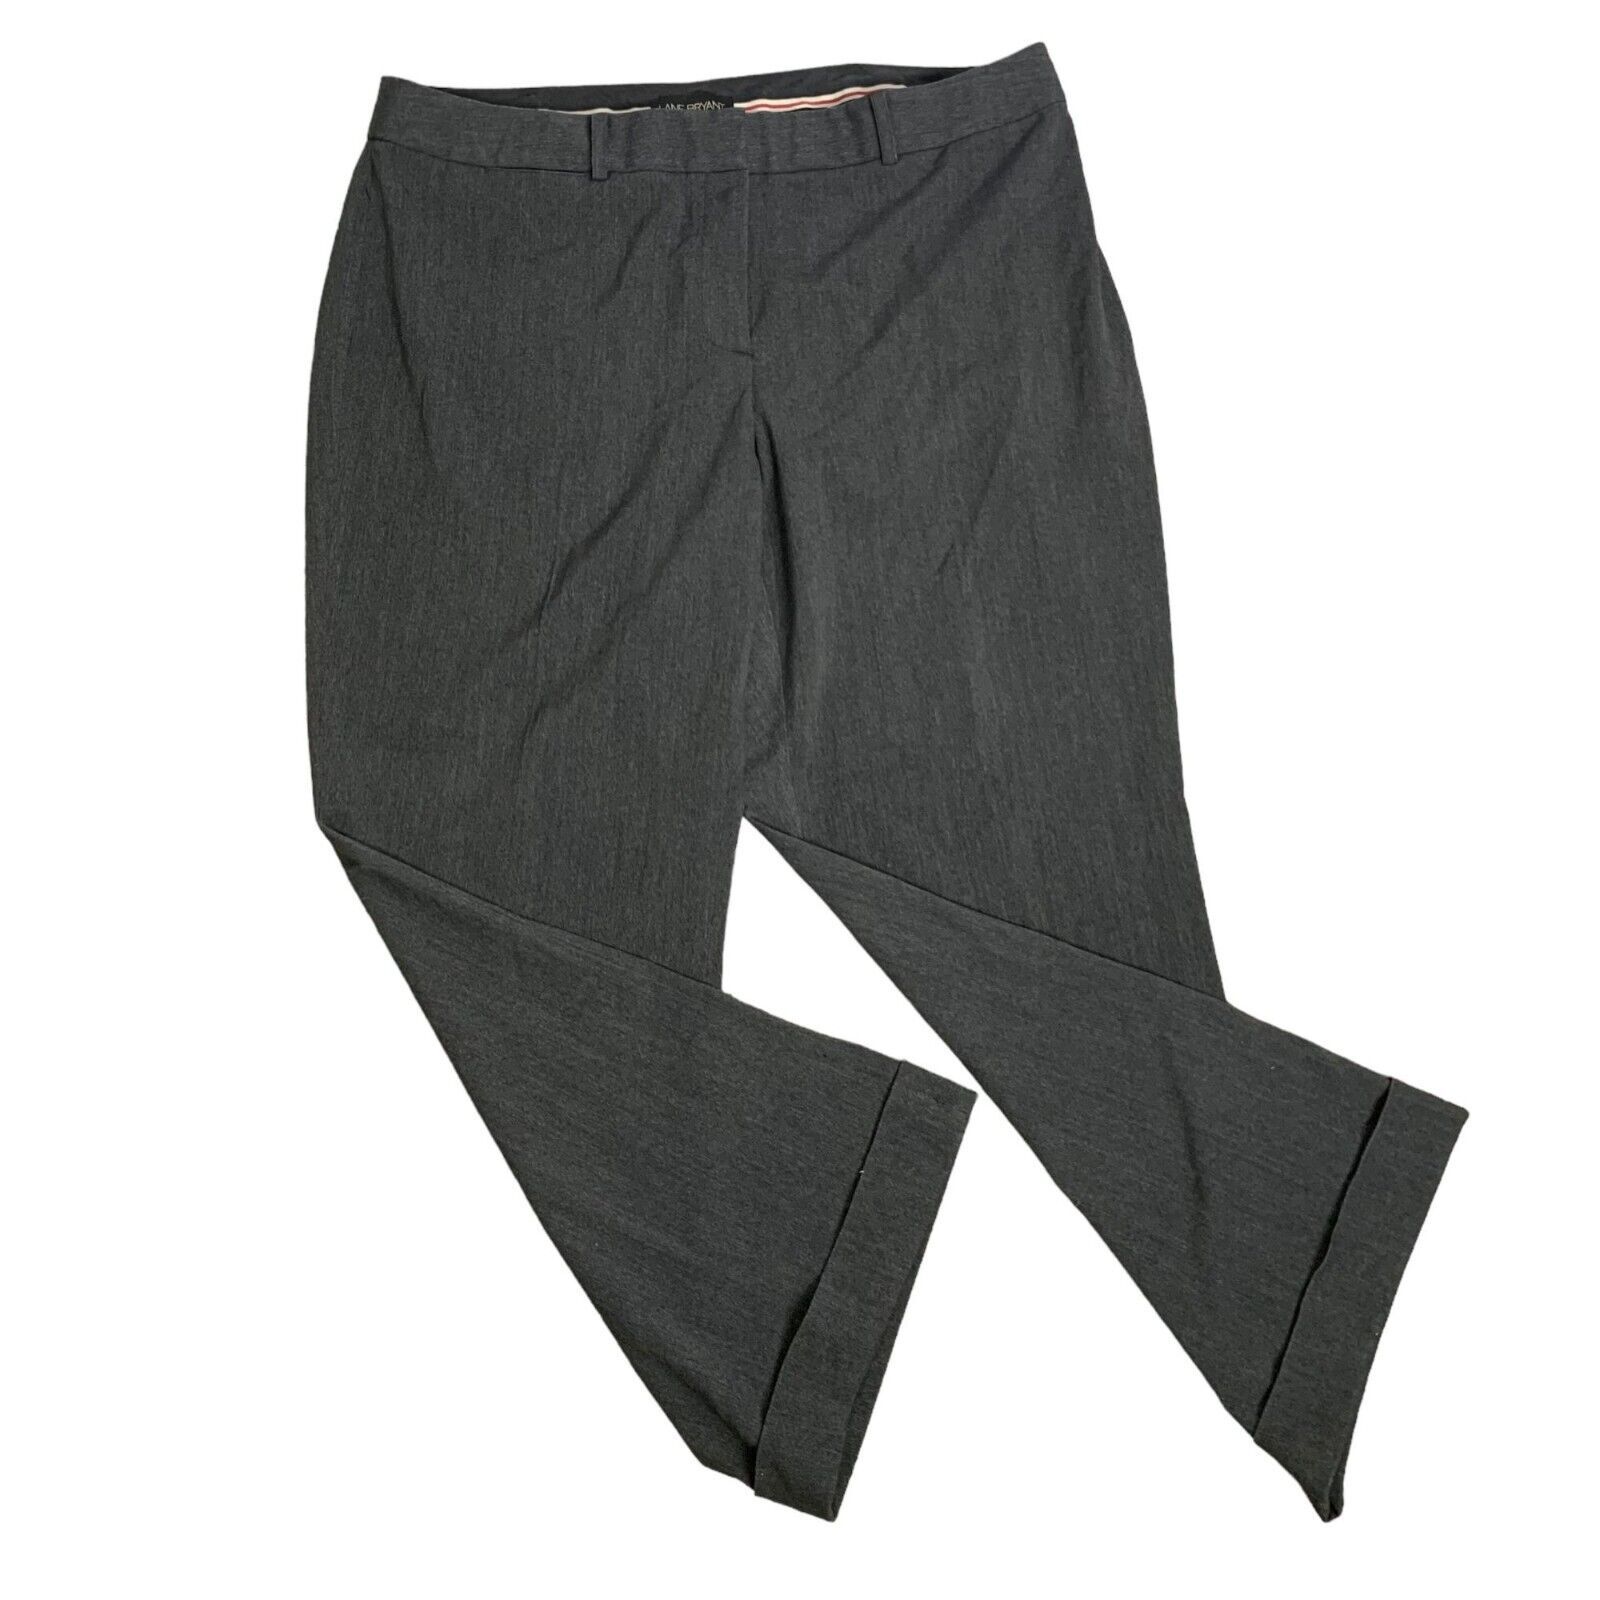 Asos Design Tall Ponte Flare Pants 6 Black Stretch Knit Leggings